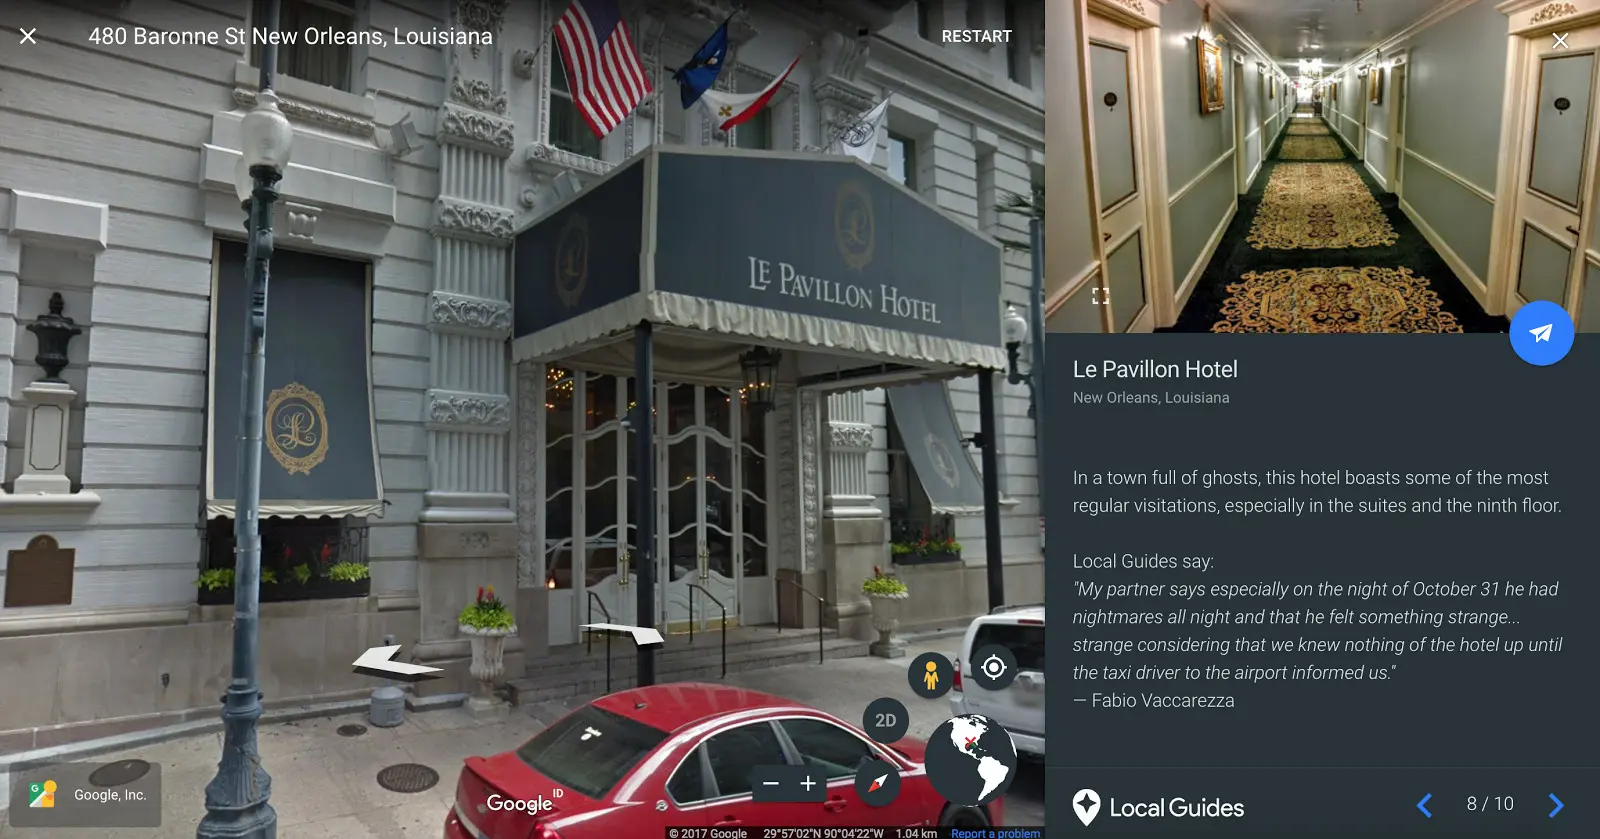 Hotel Le Pavillion tempat paling menyeramkan di dunia versi Google (Sumber: Google Local Guides)